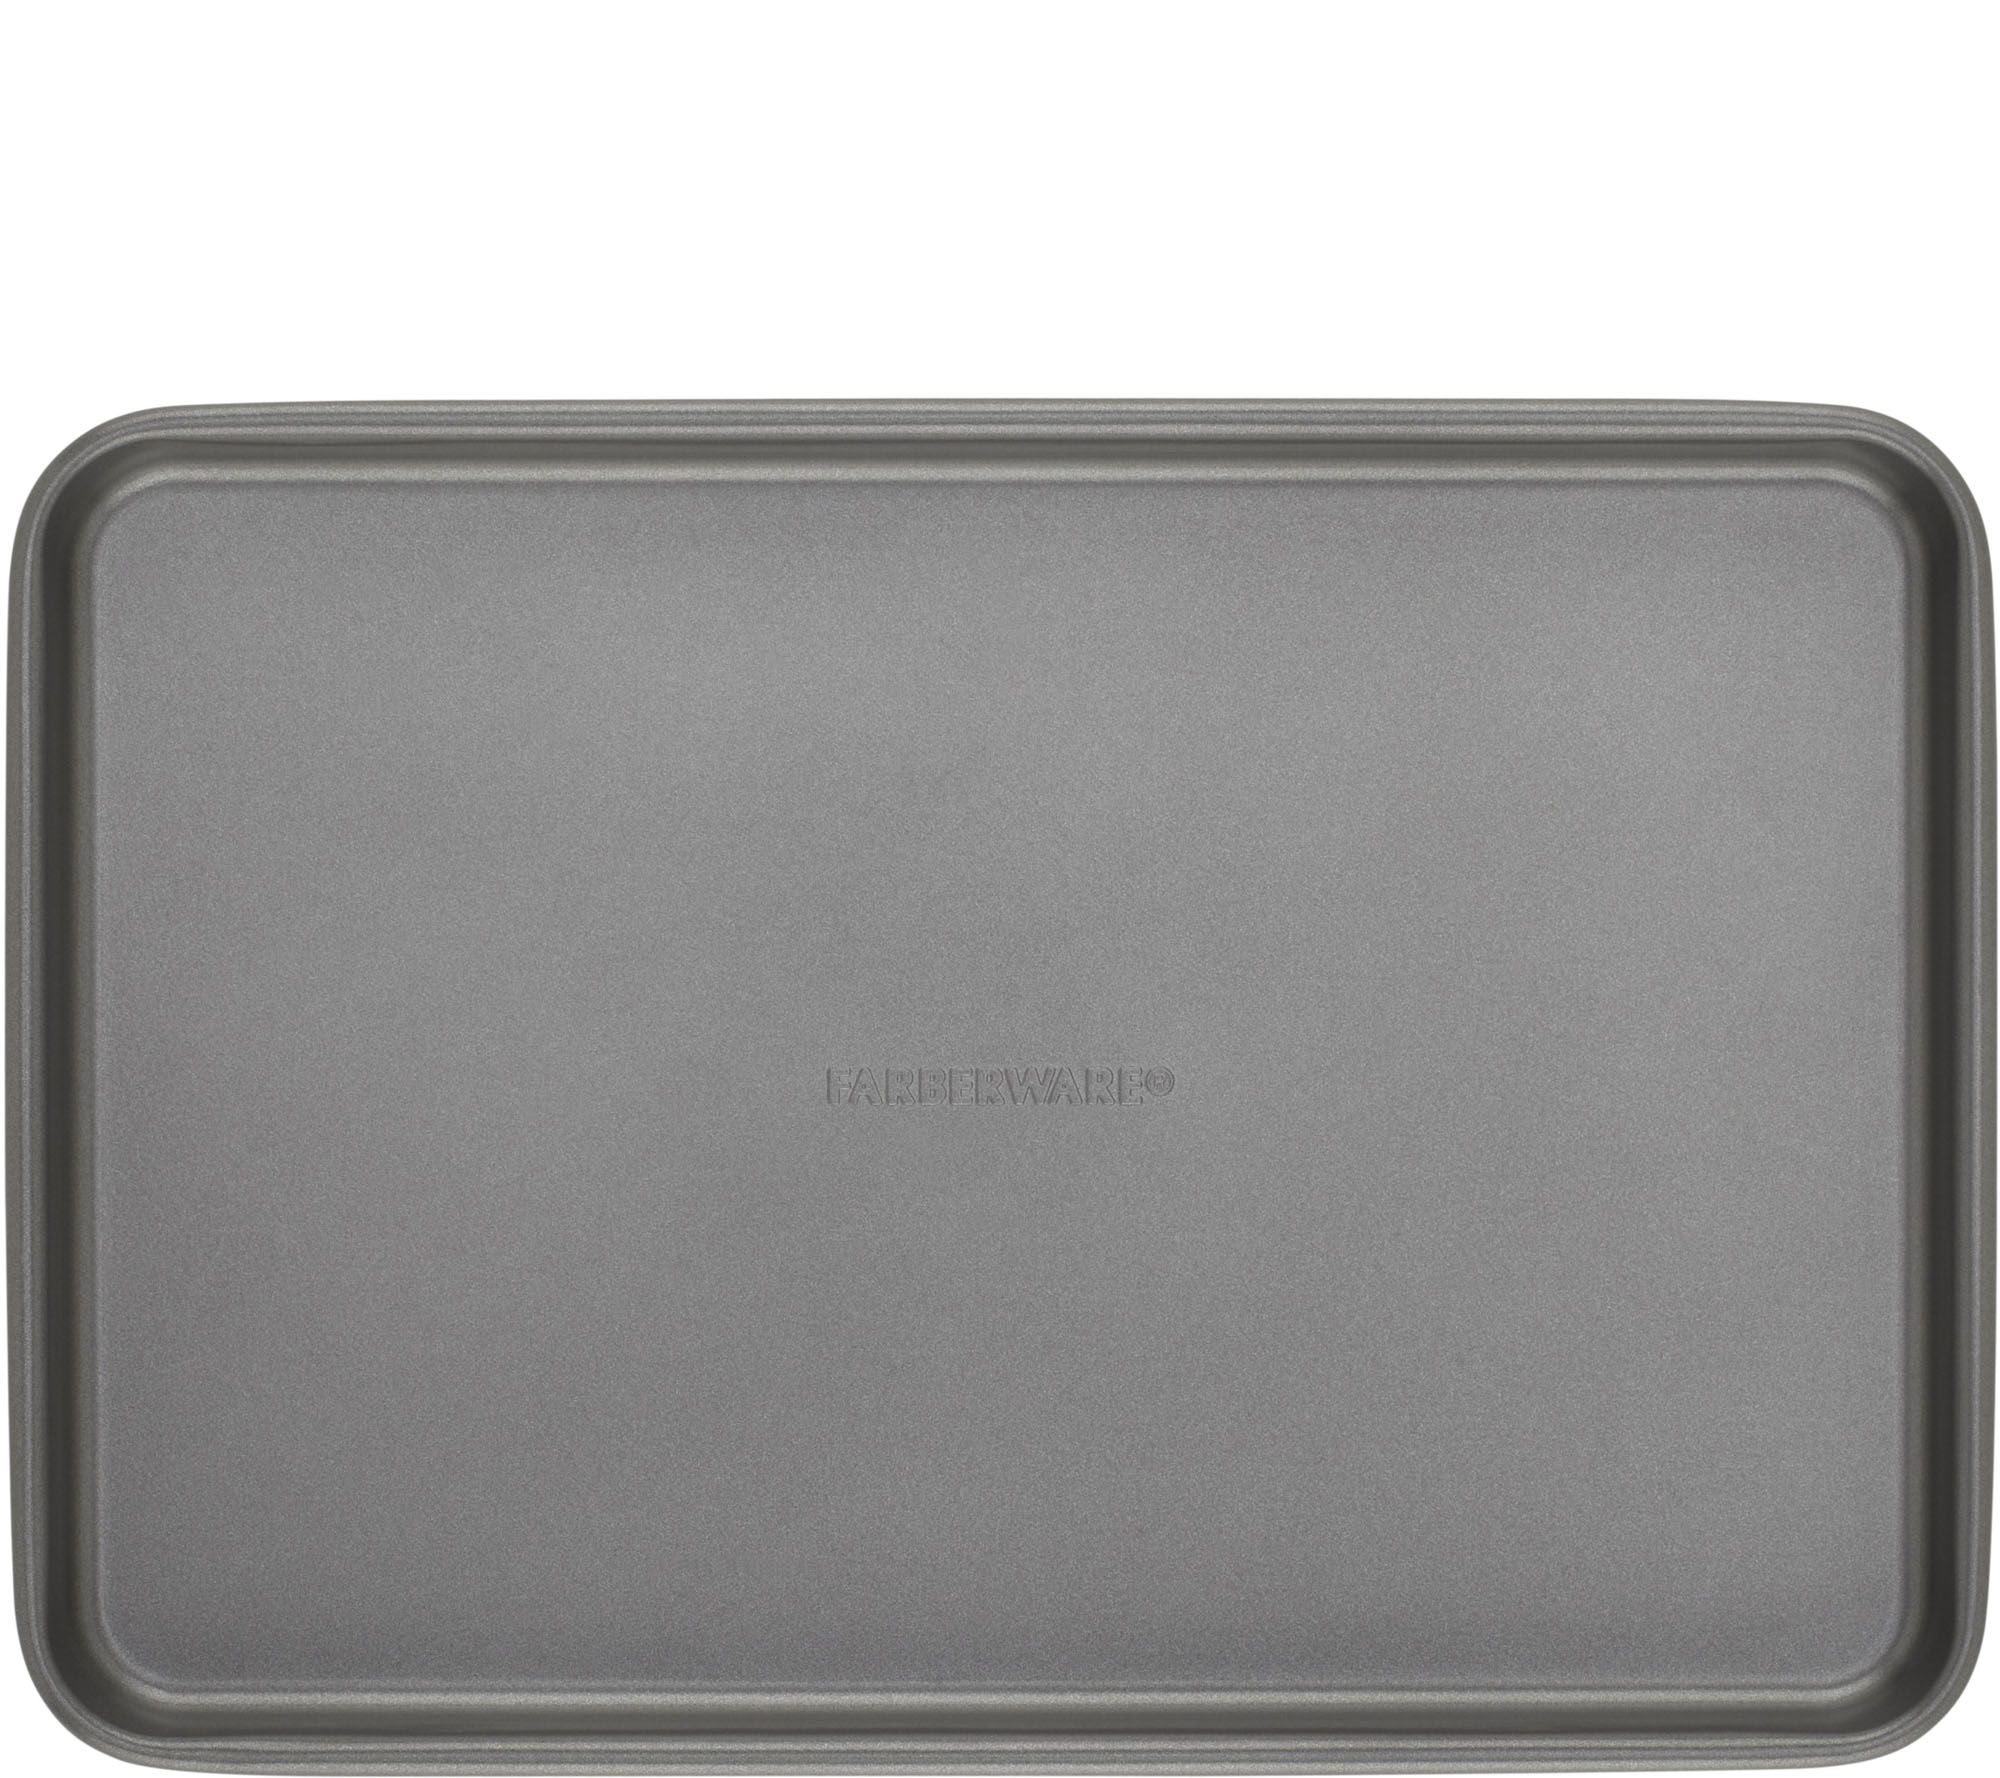 Farberware Steel Roaster with Flat Rack, 10.5 x 15, Gray